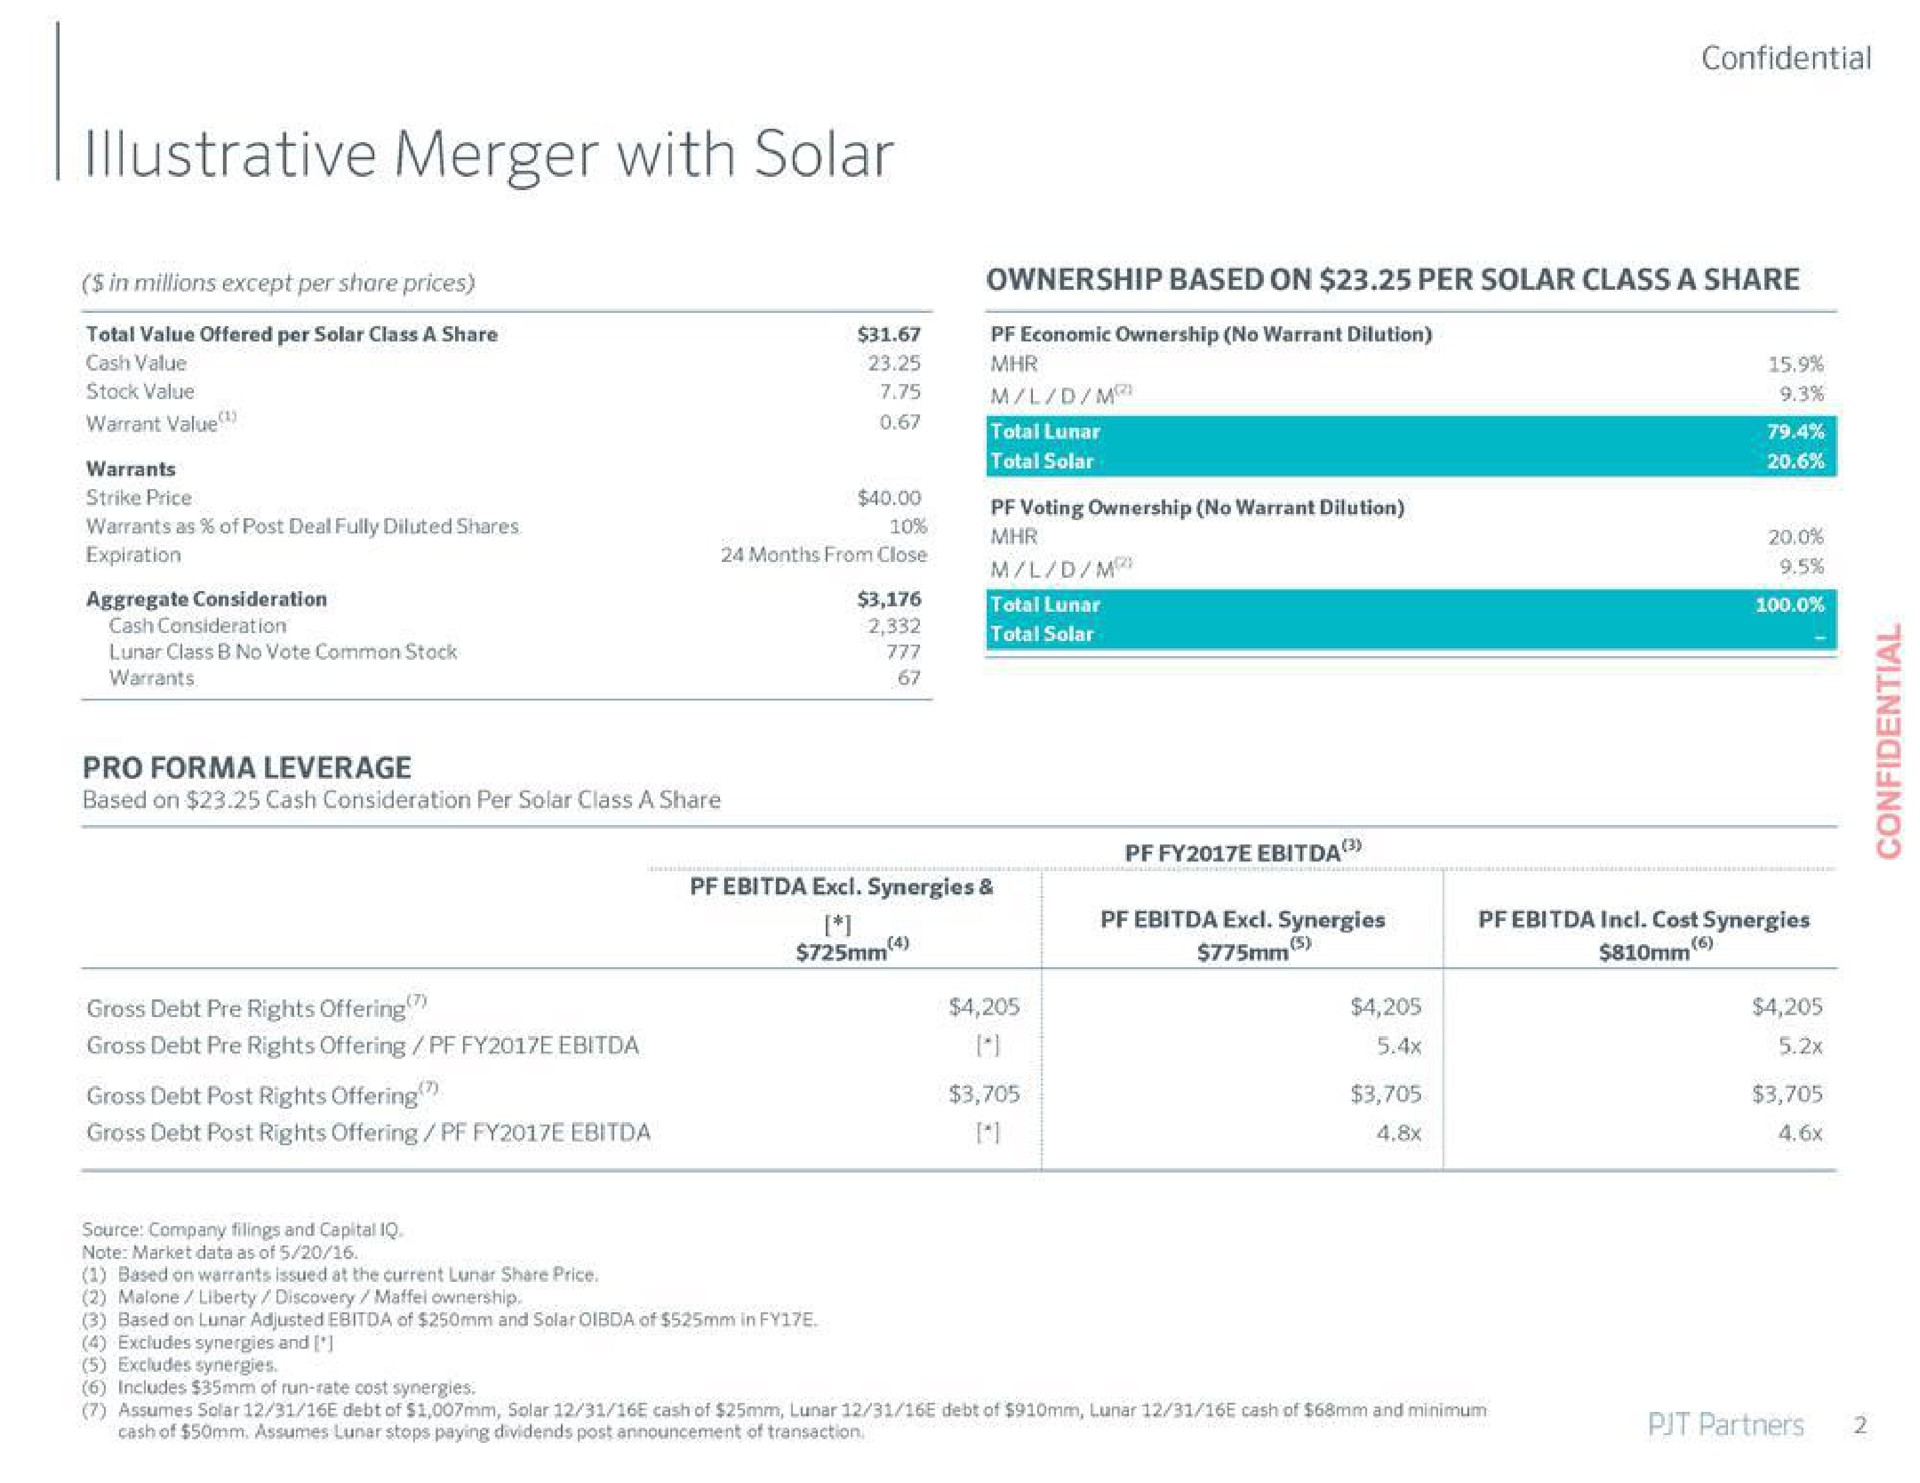 illustrative merger with solar | PJT Partners